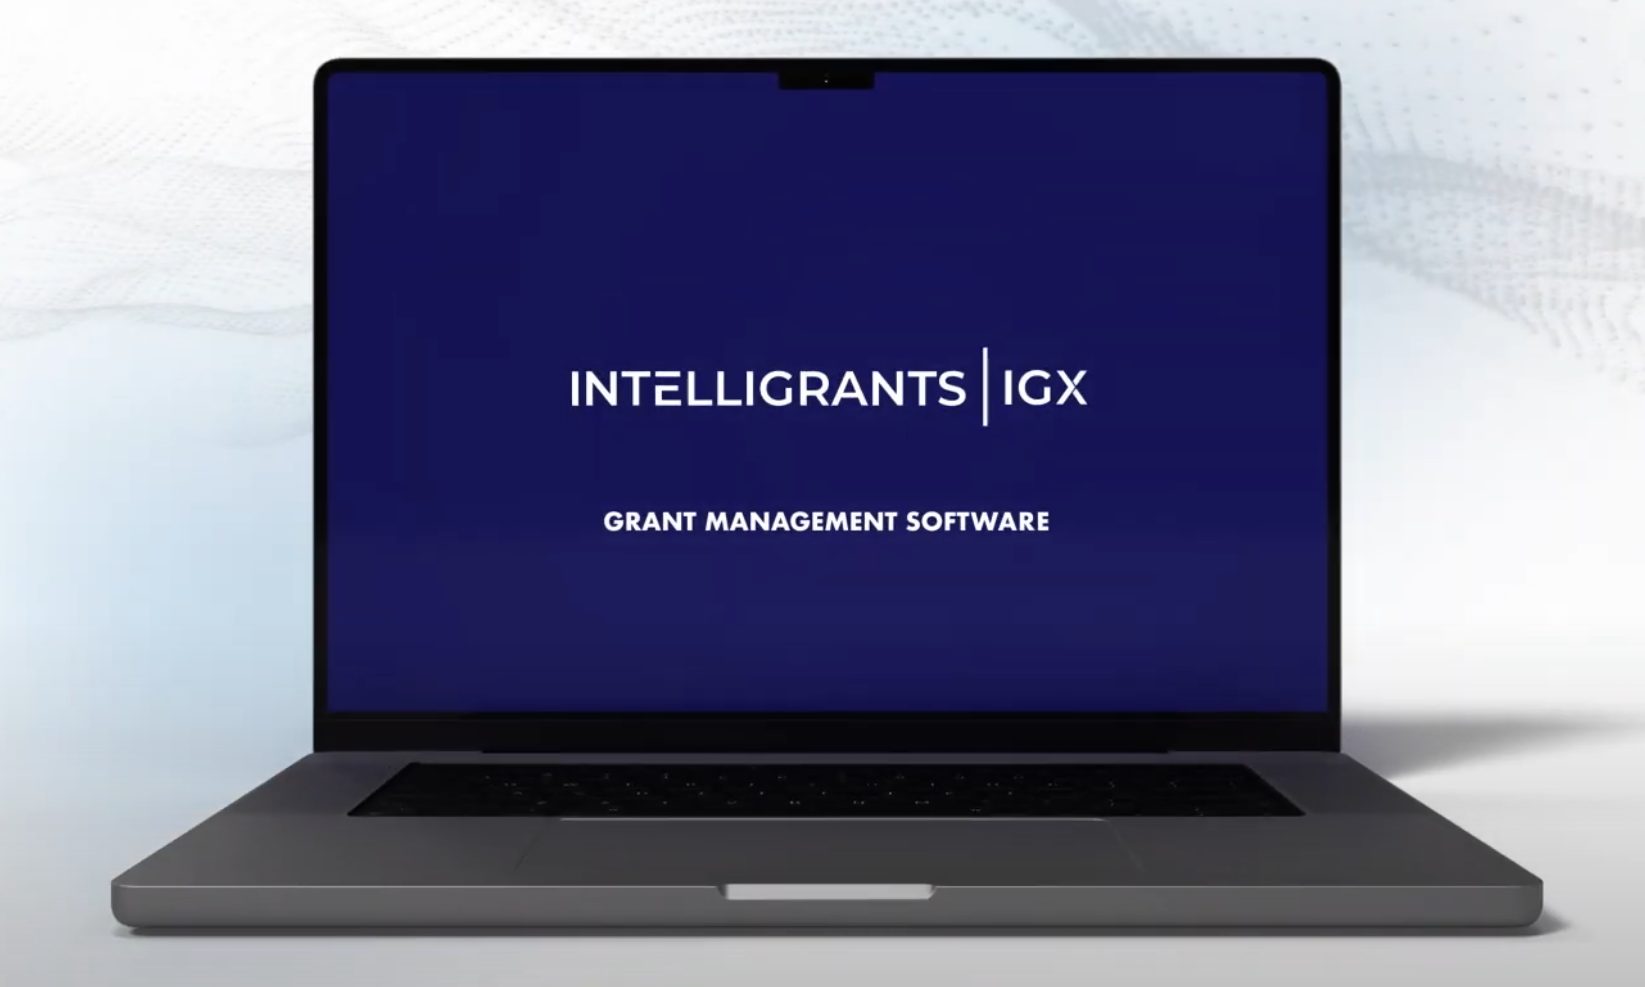 IntelliGrants IGX